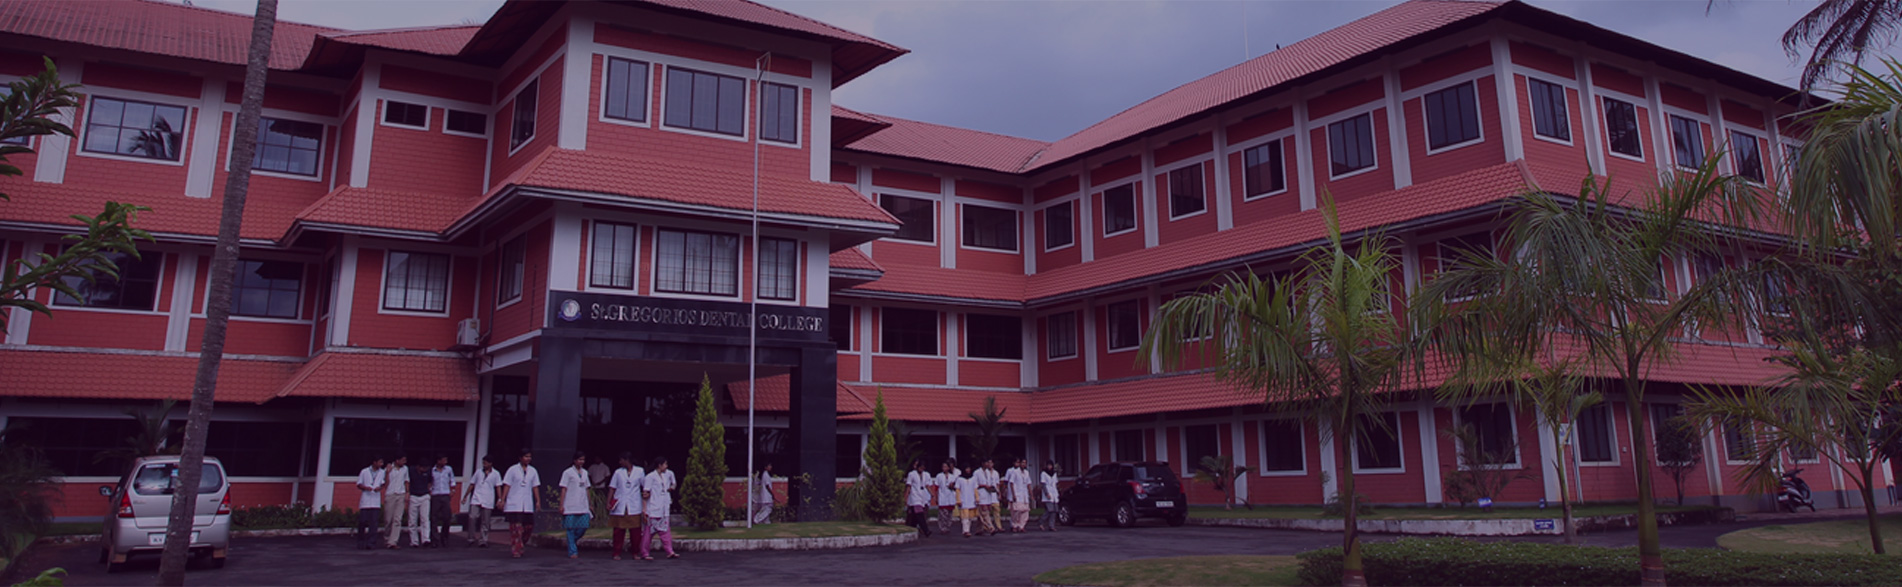 St. Gregorios Dental College, Ernakulam Image